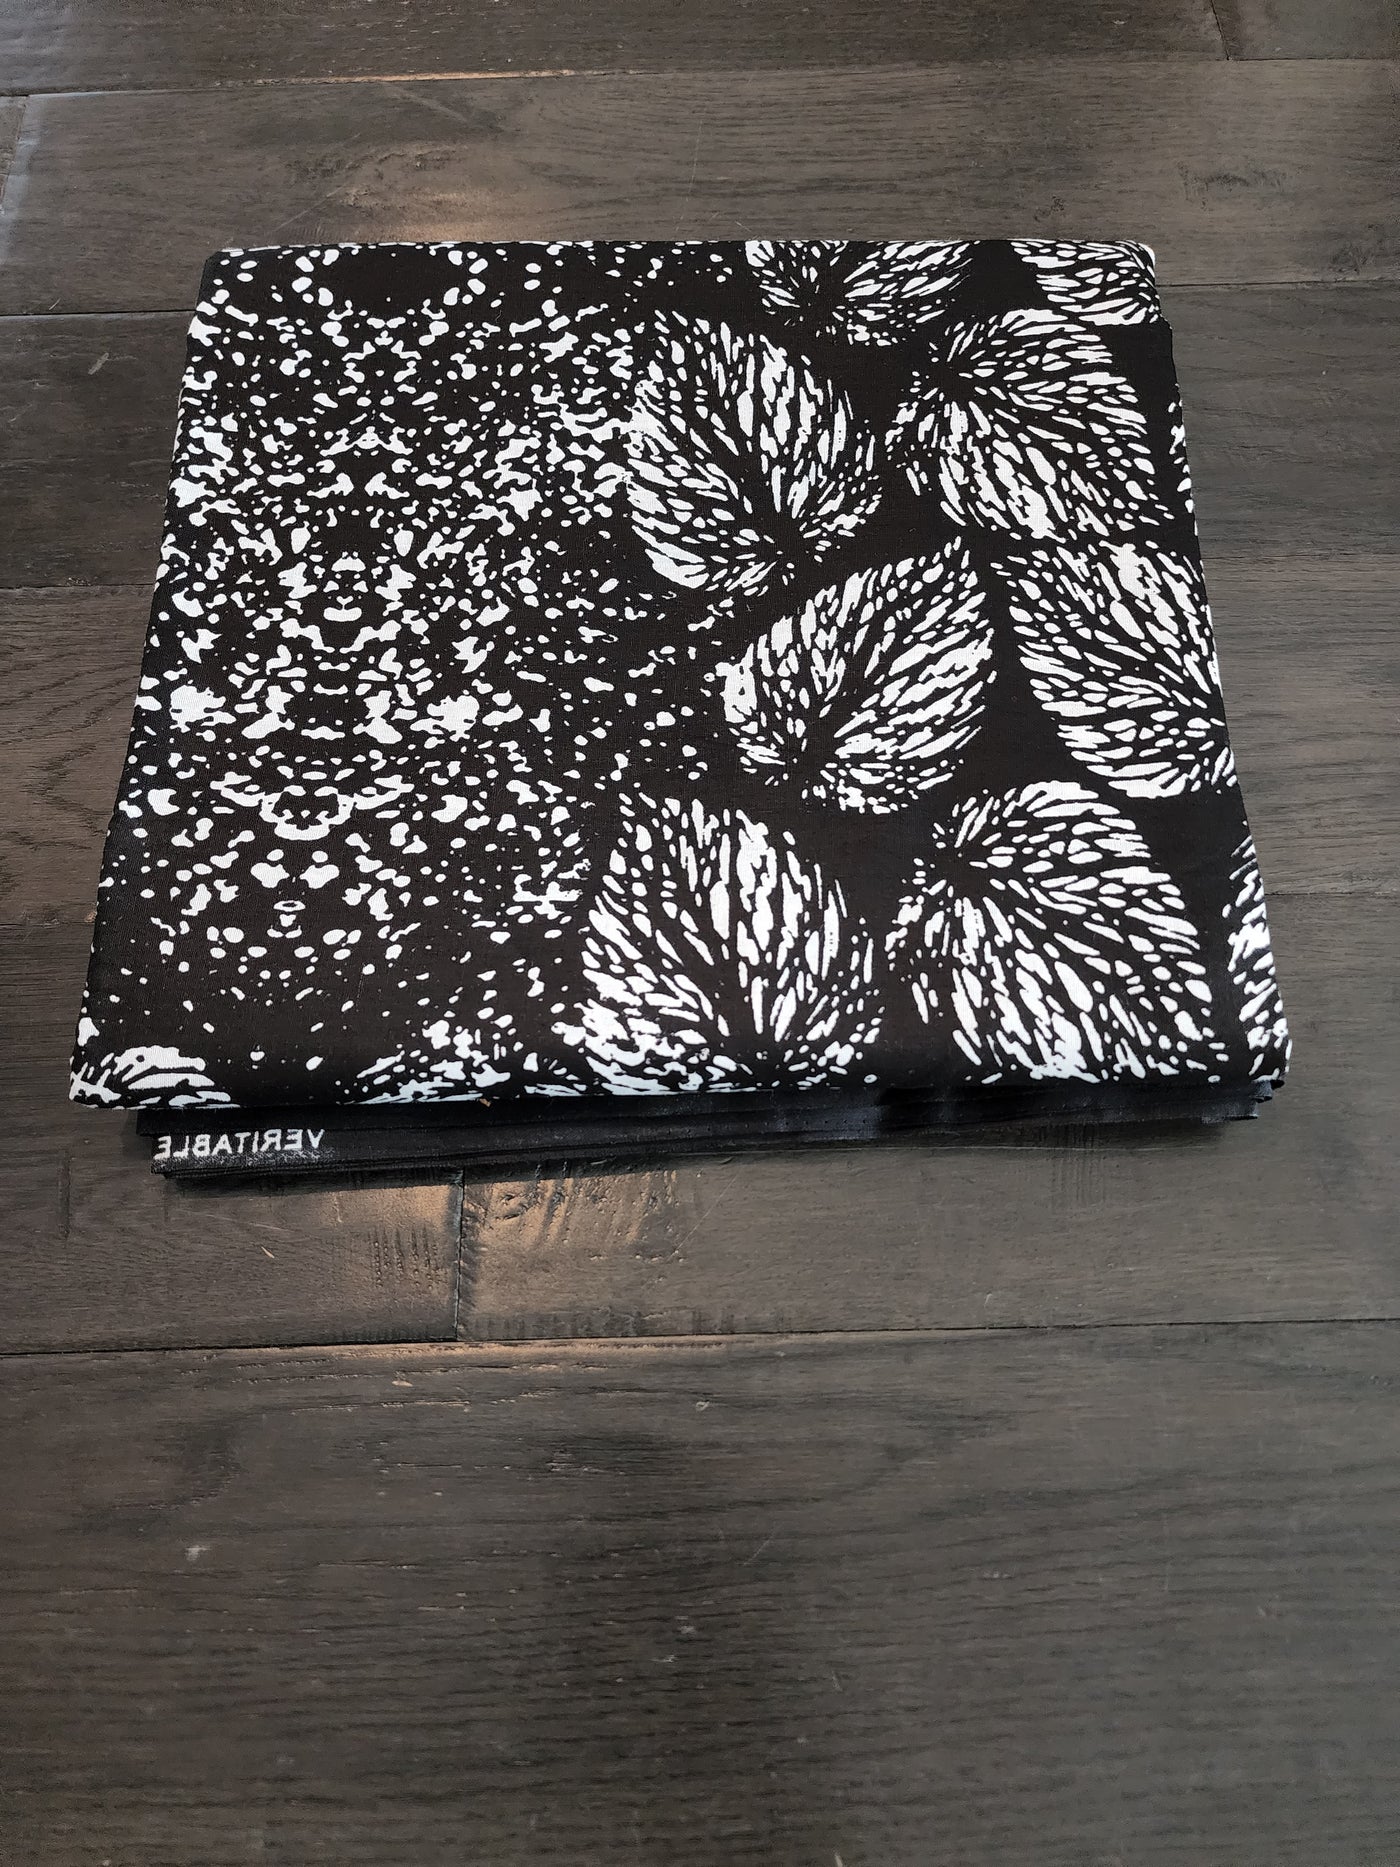 Black and White Ankara Fabric, ACS0454